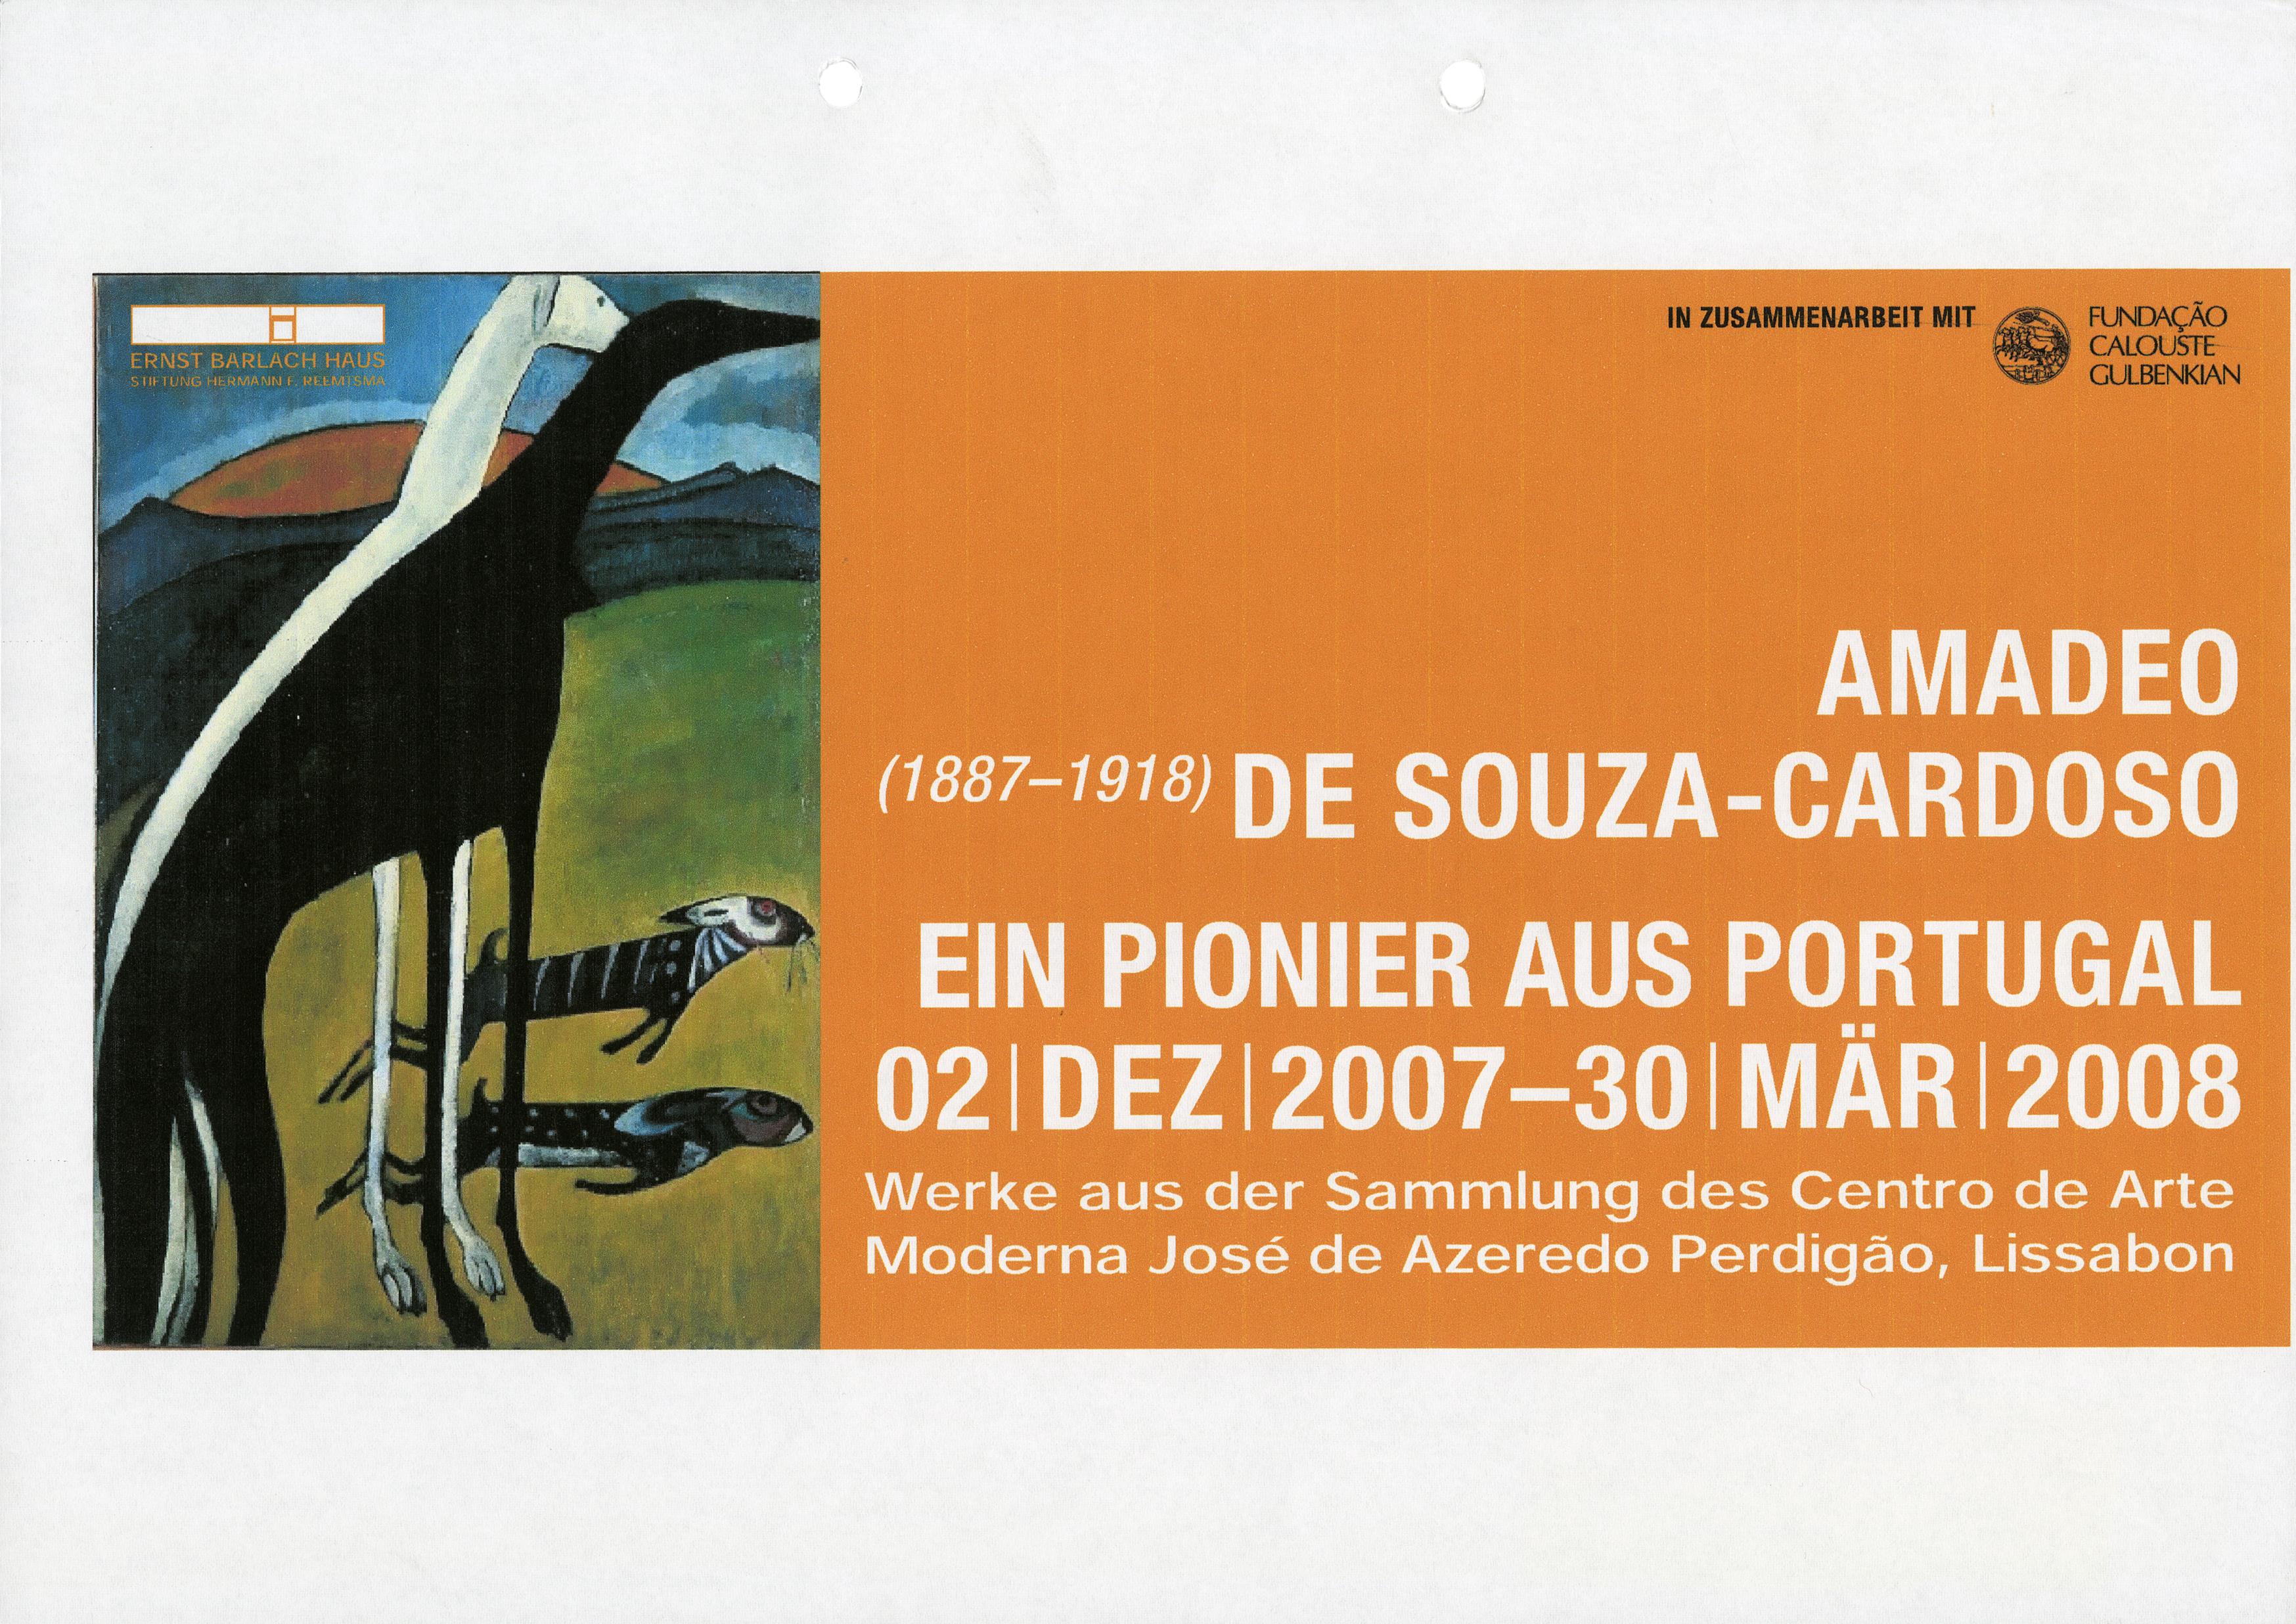 Amadeo de Souza-Cardoso (1887 – 1918) / Ein Pionier aus Portugal [telão]